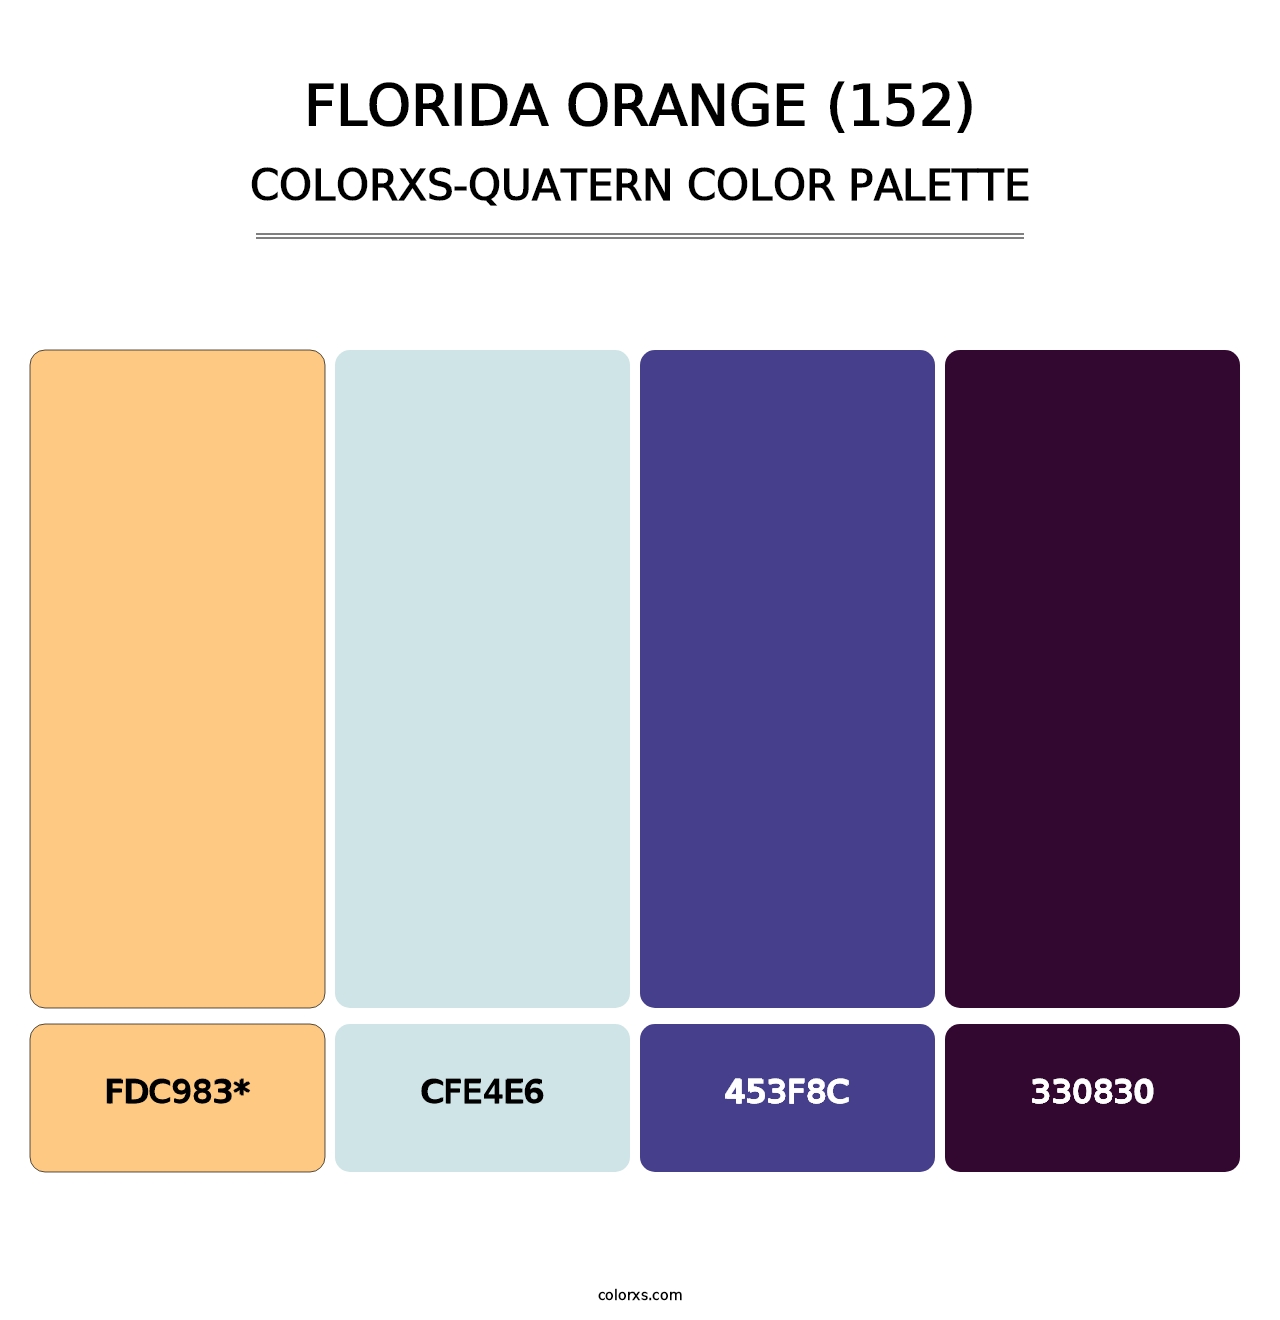 Florida Orange (152) - Colorxs Quatern Palette